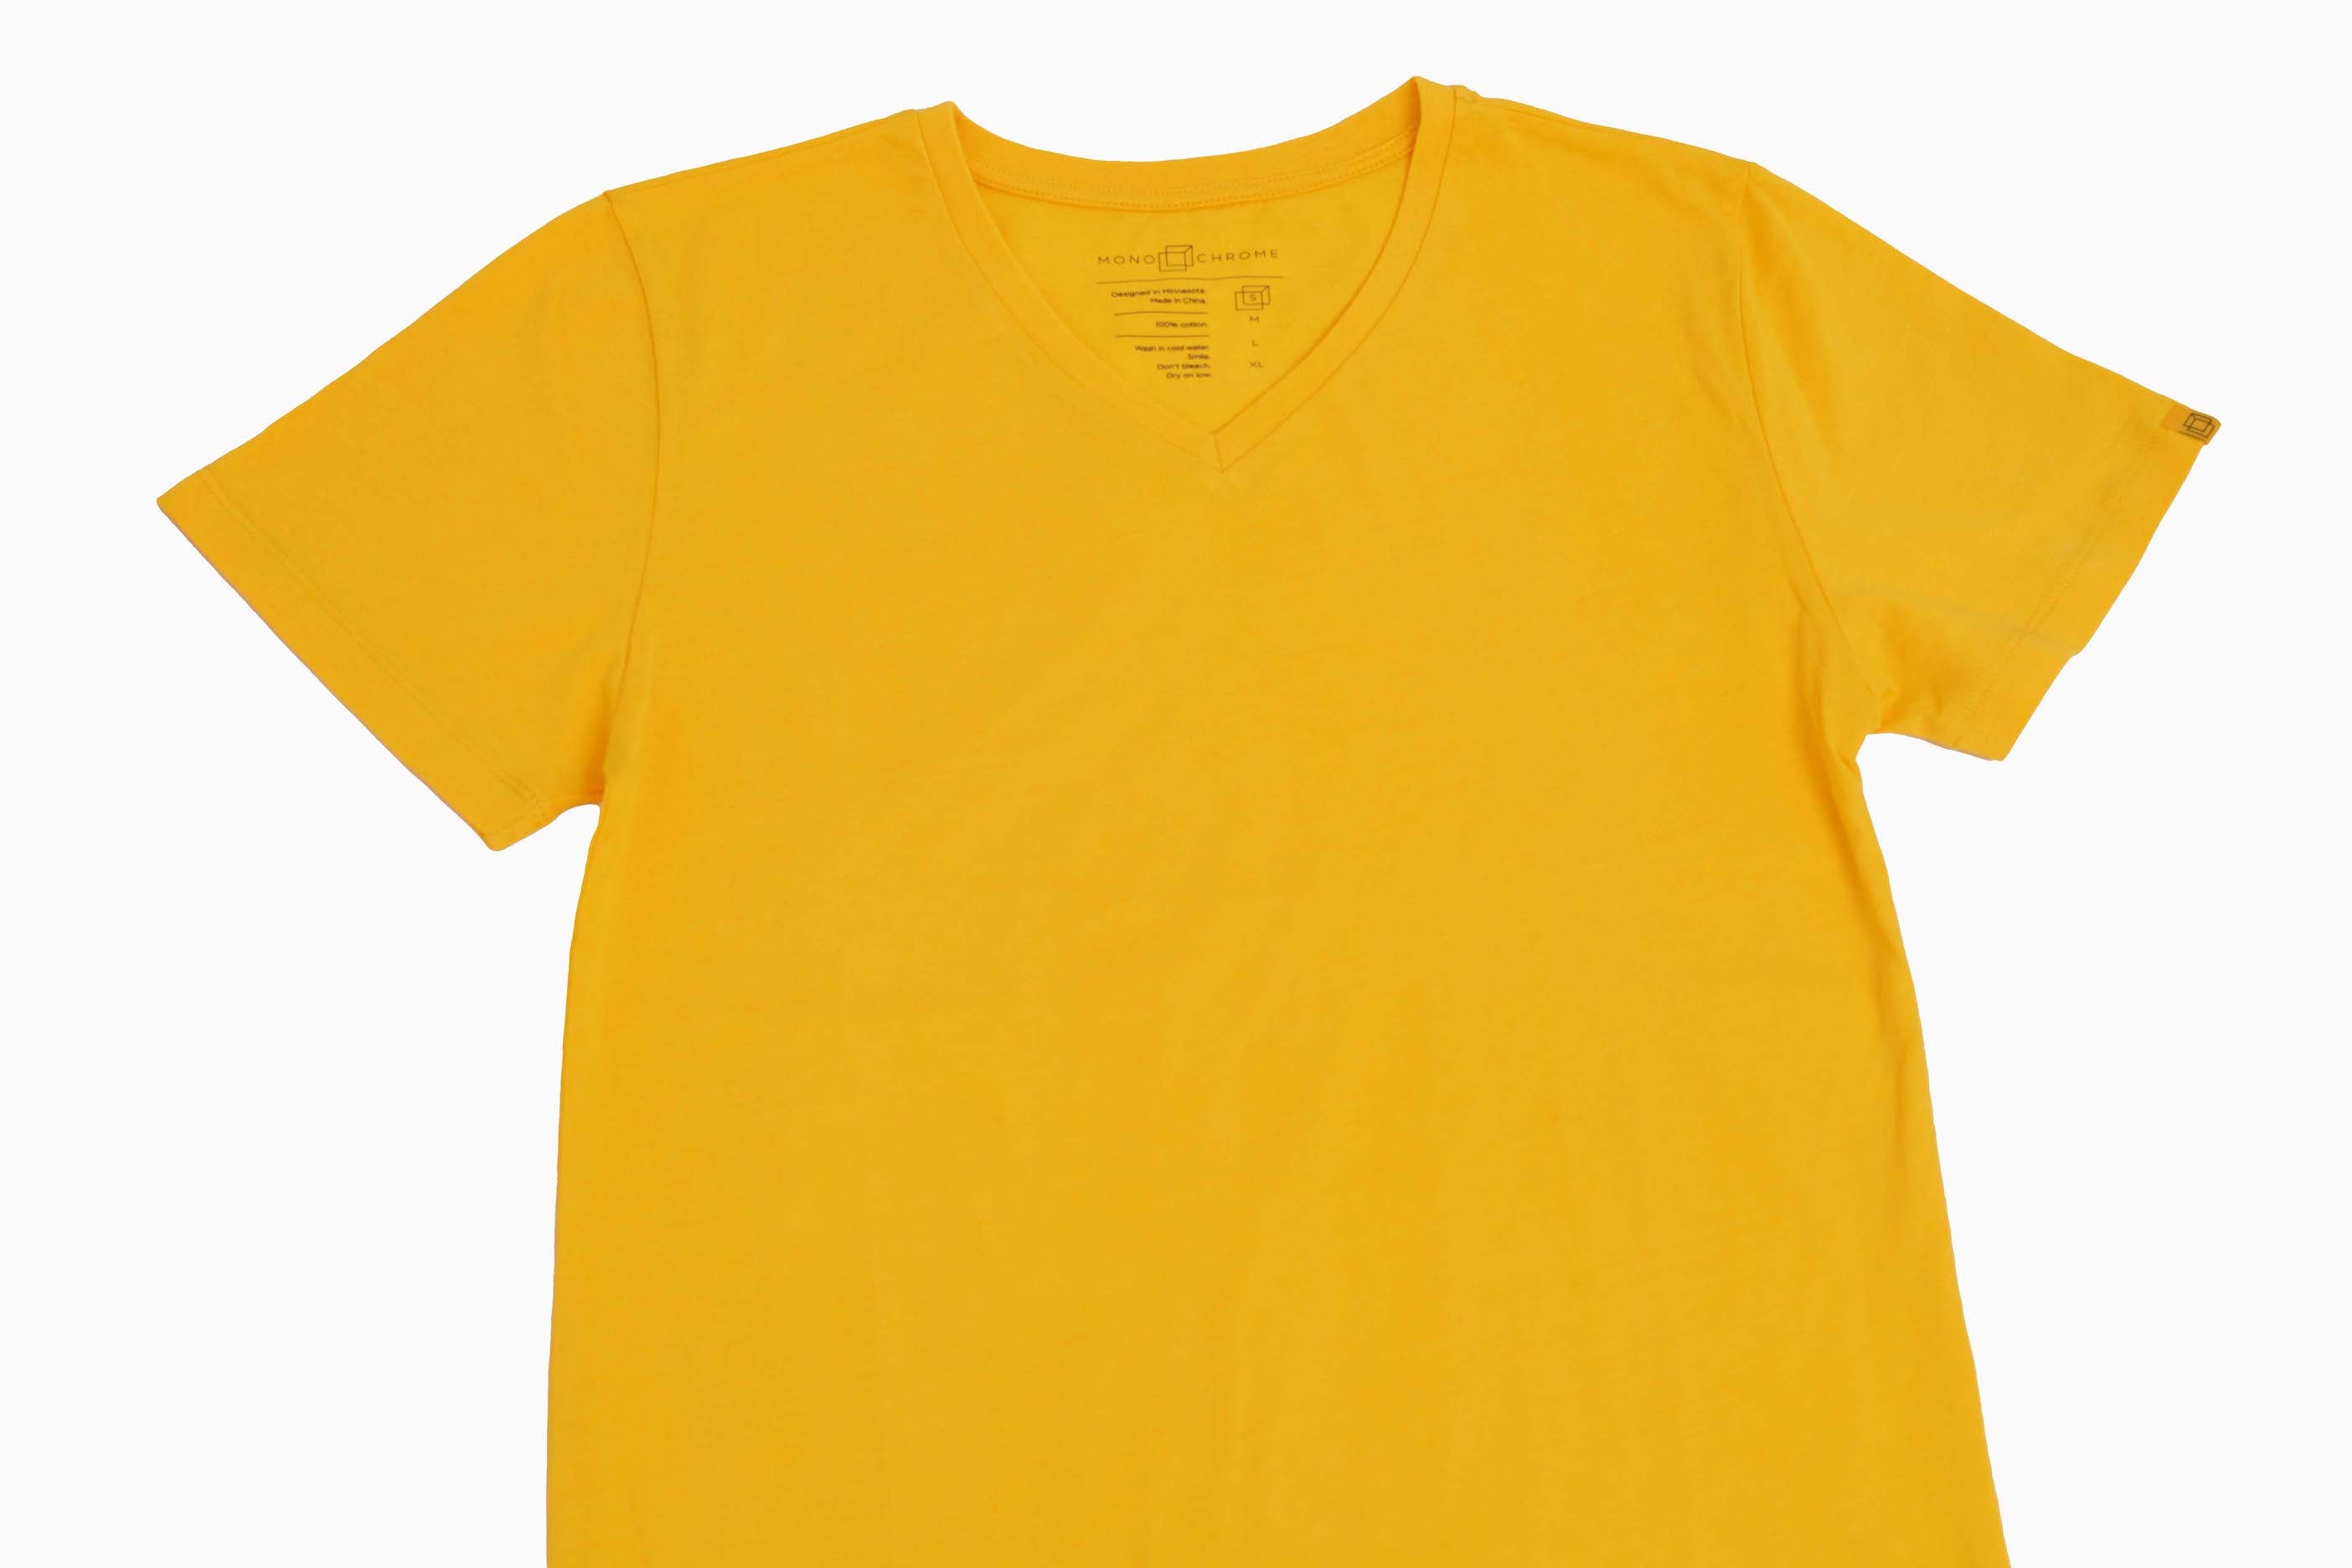 Men's T-Shirt - Yellow - XL